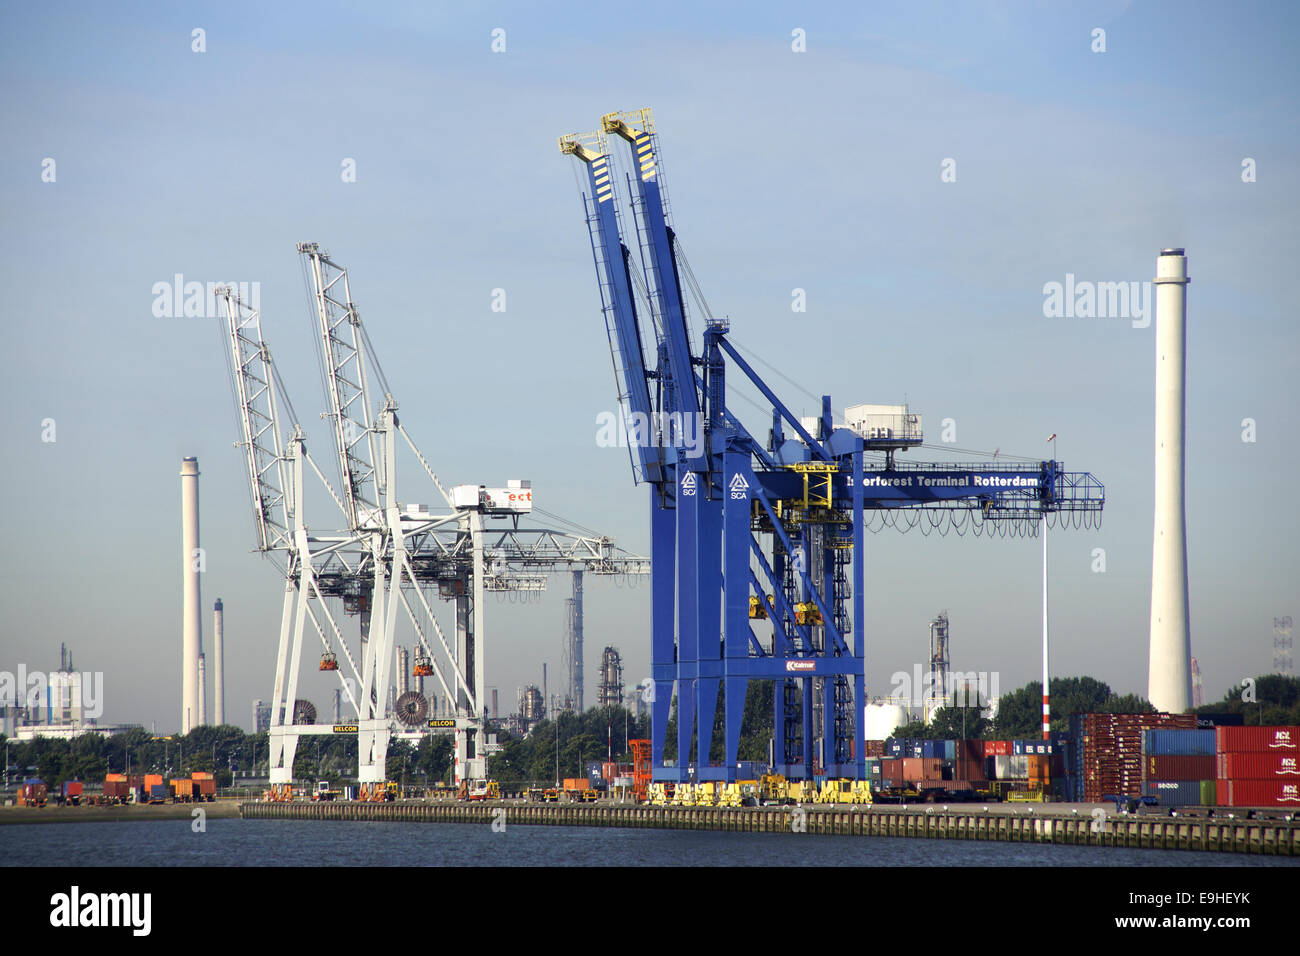 Container bridge in the harbor of Rotterdam Stock Photo